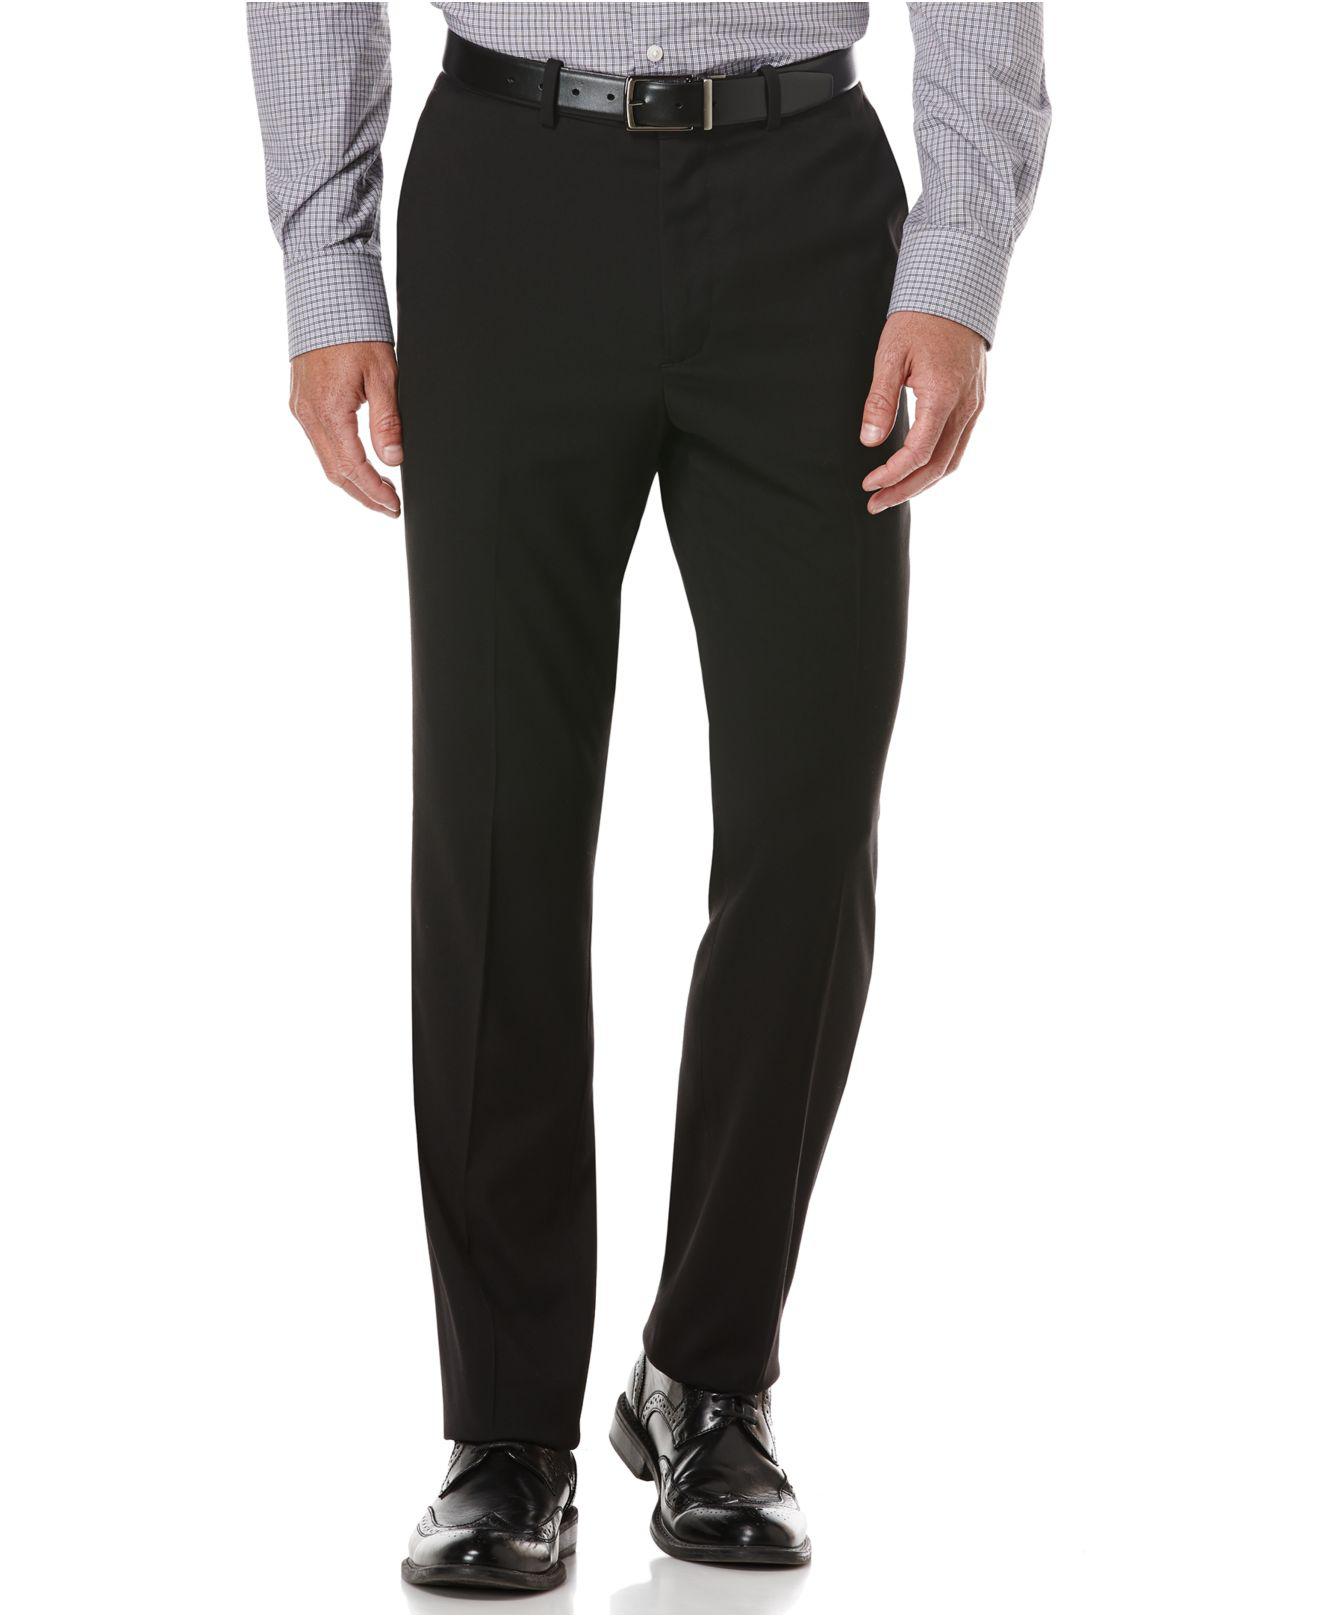 Perry Ellis Synthetic Slim Fit Pants in Black for Men - Lyst